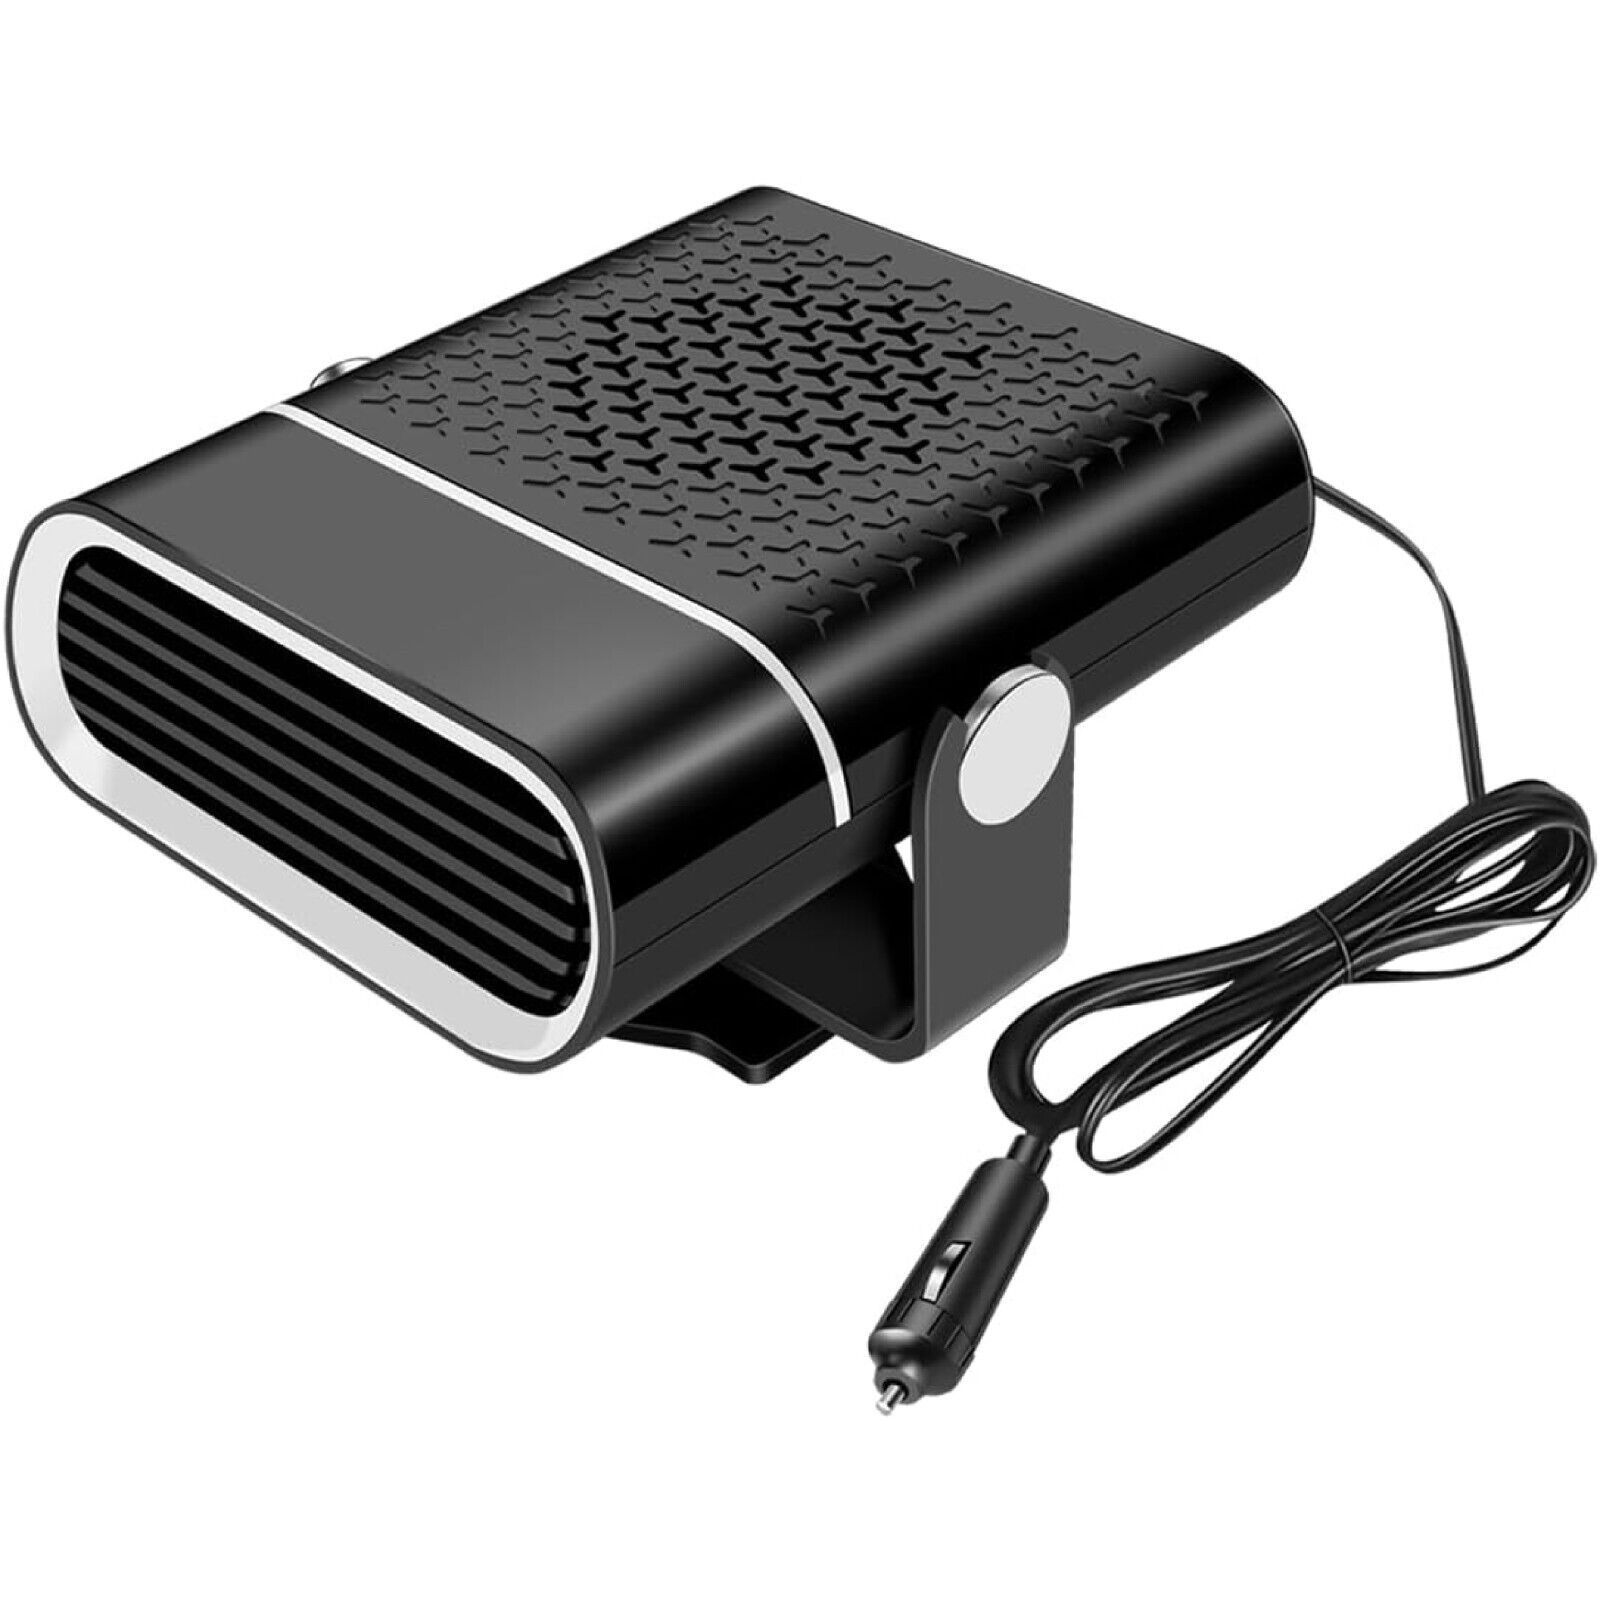 12V 150W Car Heater Dryer Plug in 2 In 1 Heater Cooler Fan Portable Demister UK